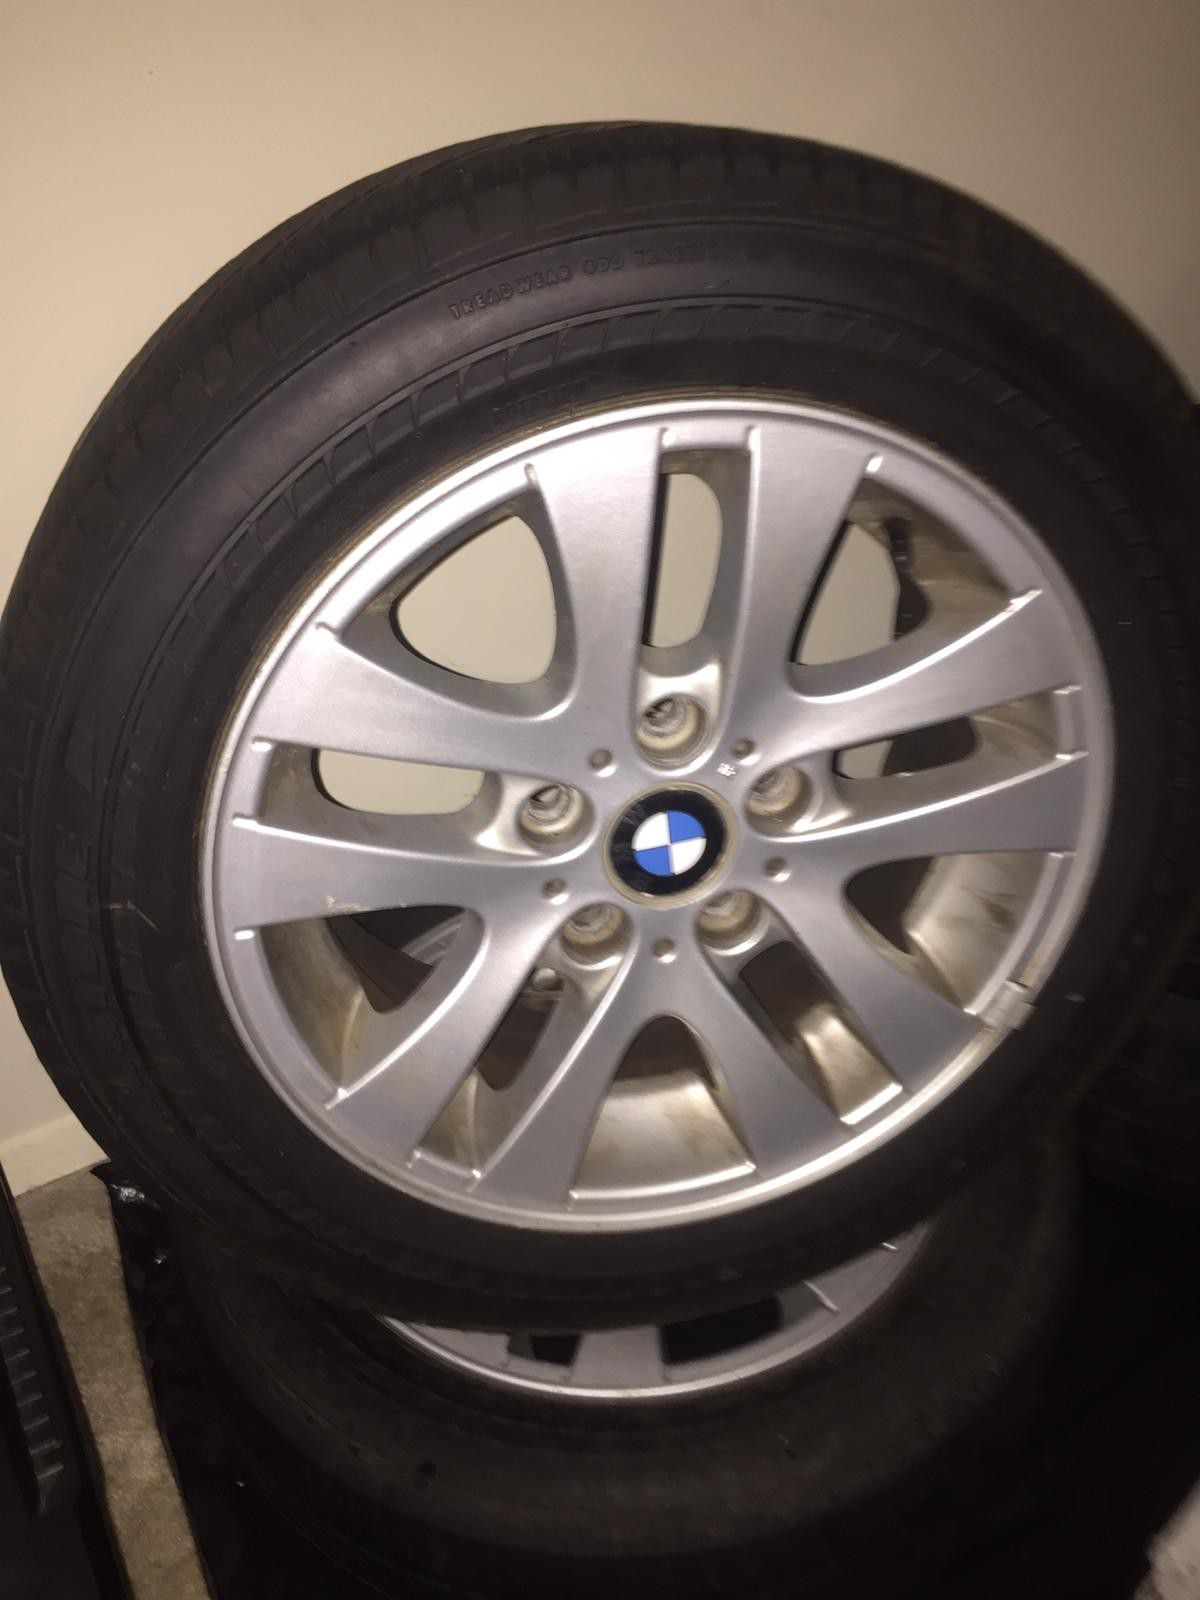 BMW 2007 tires